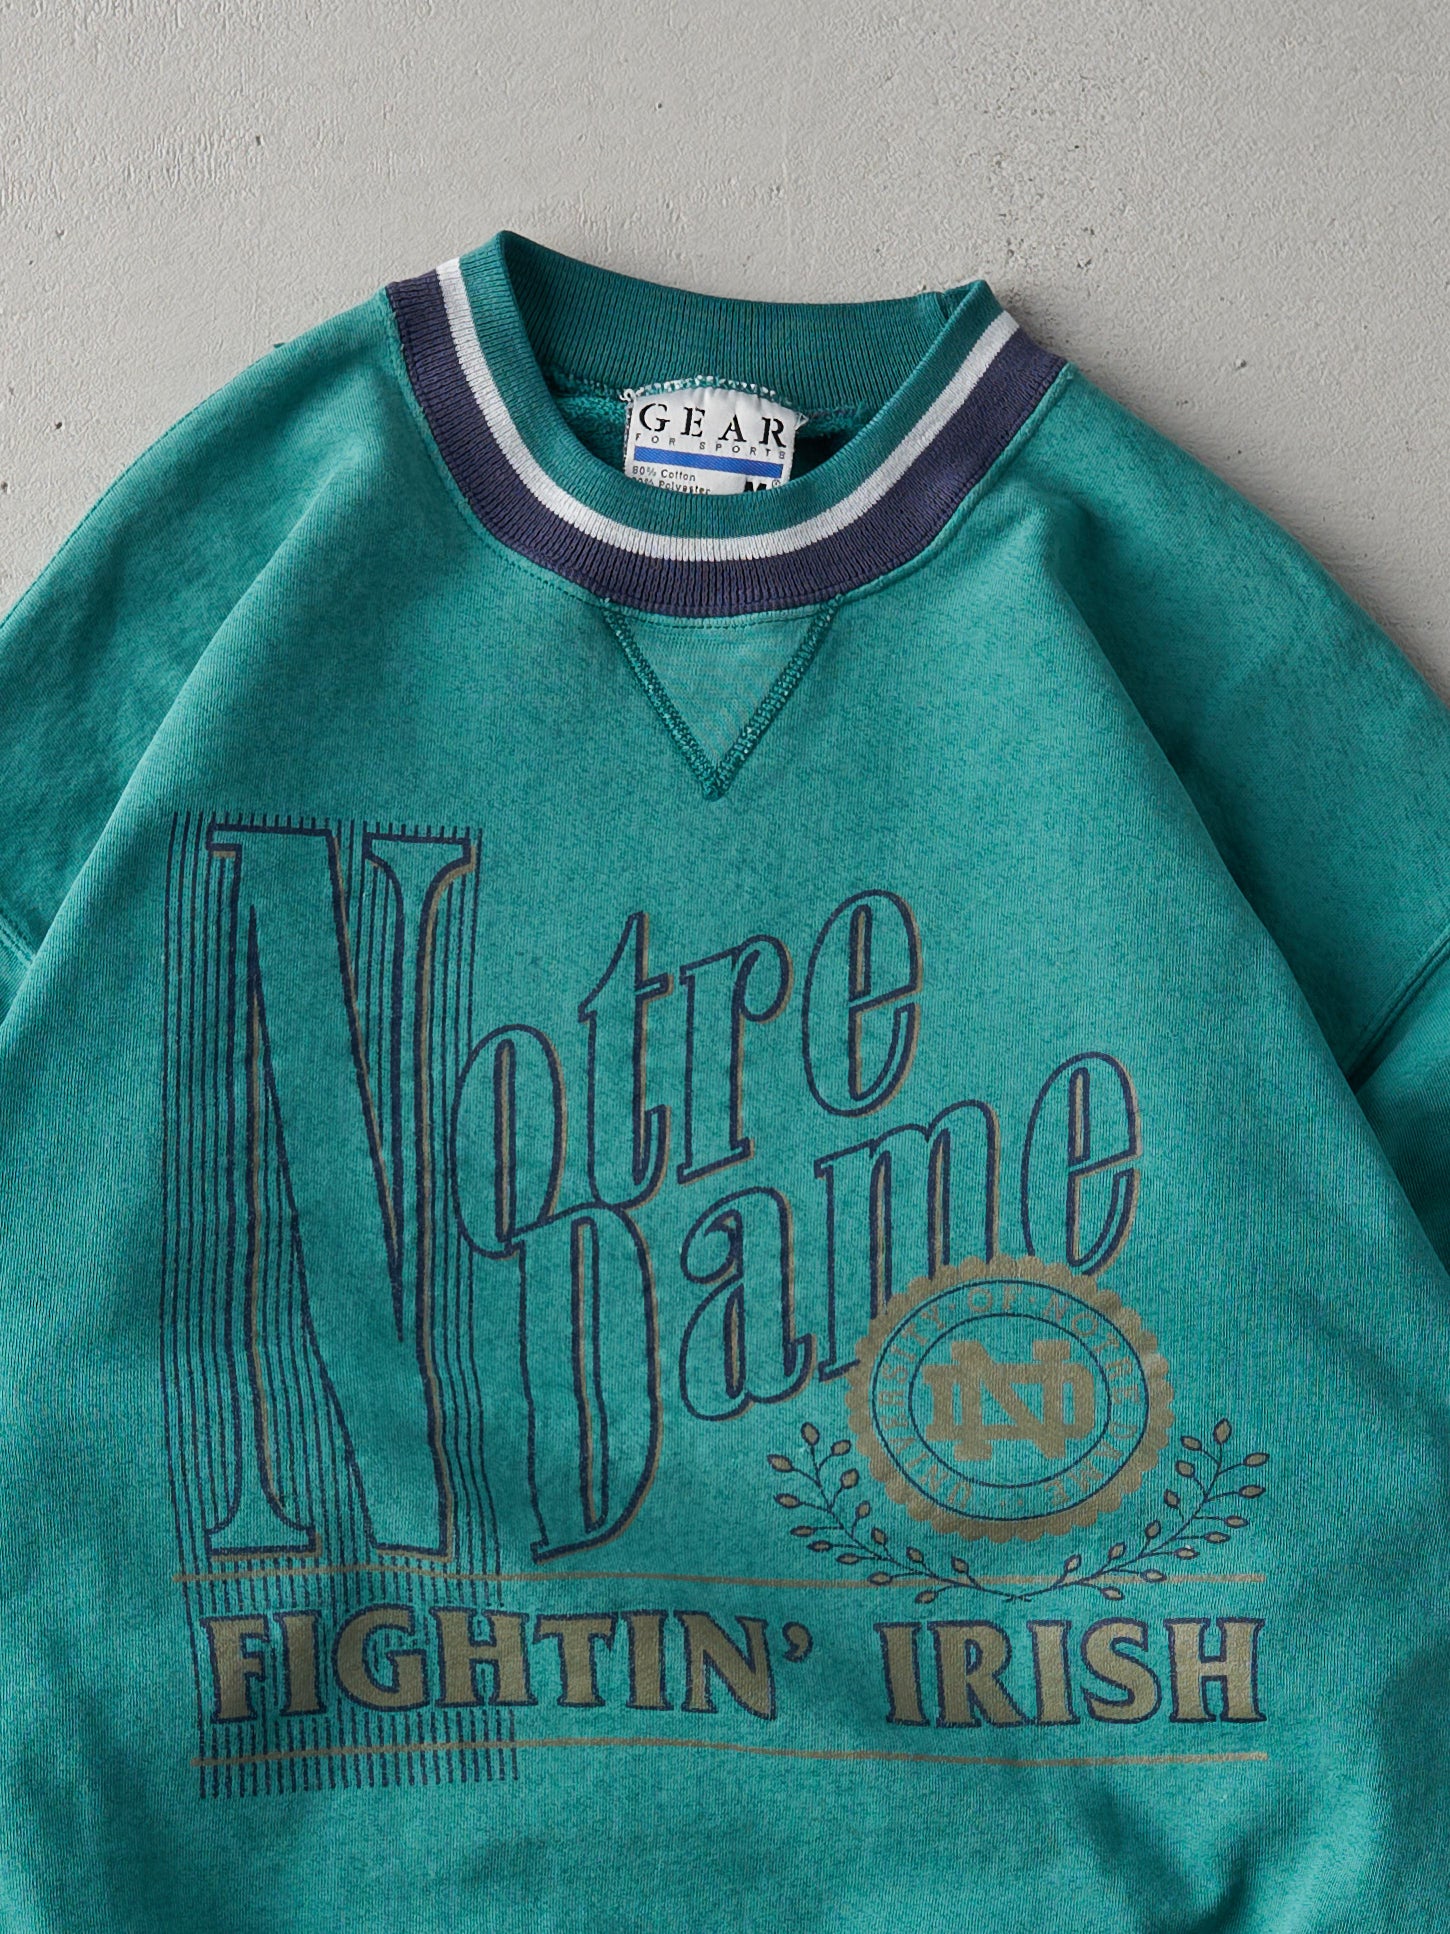 Vintage 90s Teal Notre Dame Fightin' Irish Crewneck (M)